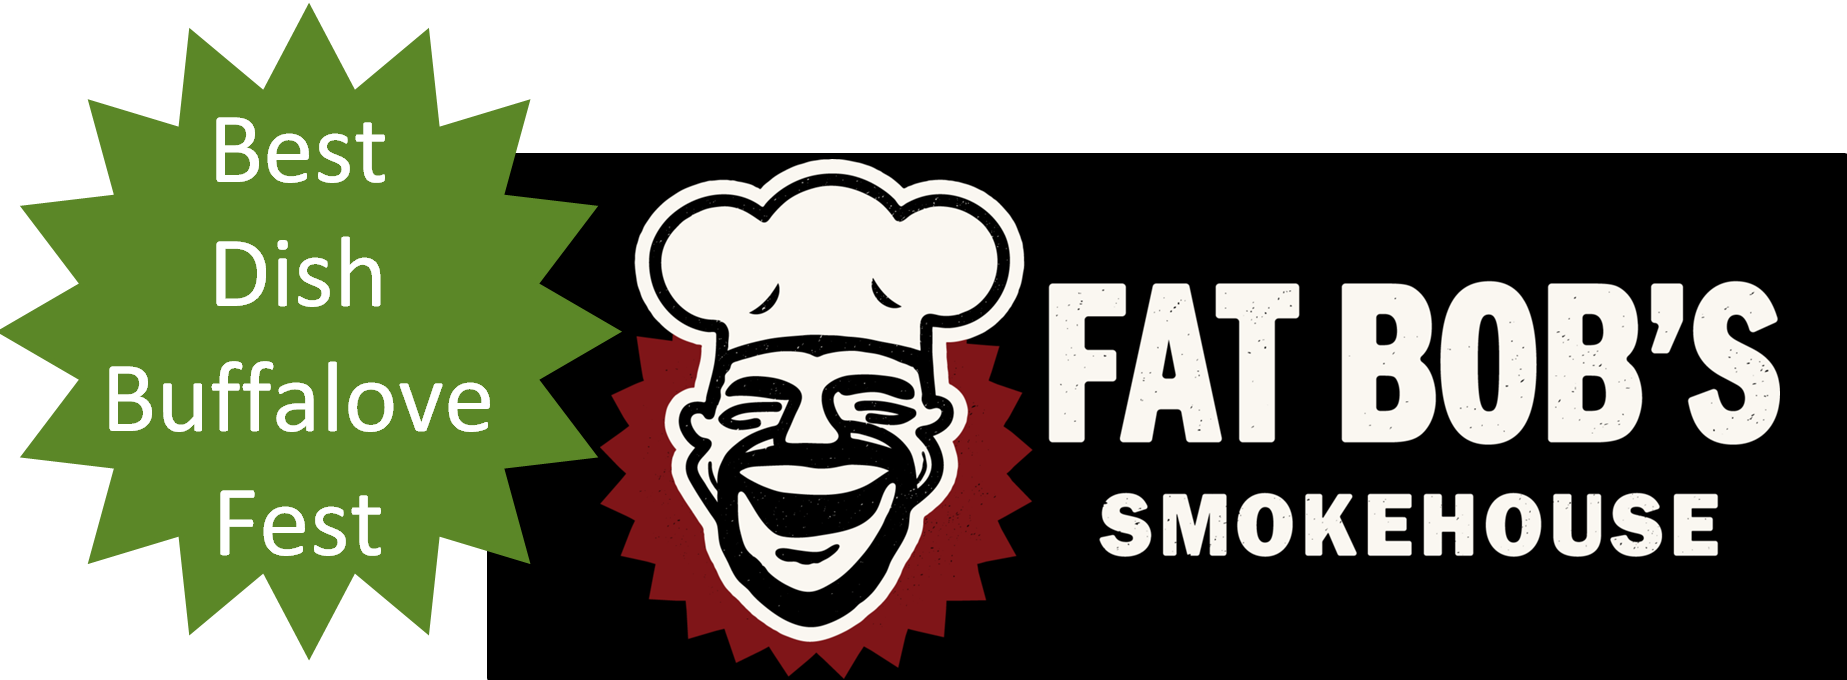 Fat Bob's Smokehouse